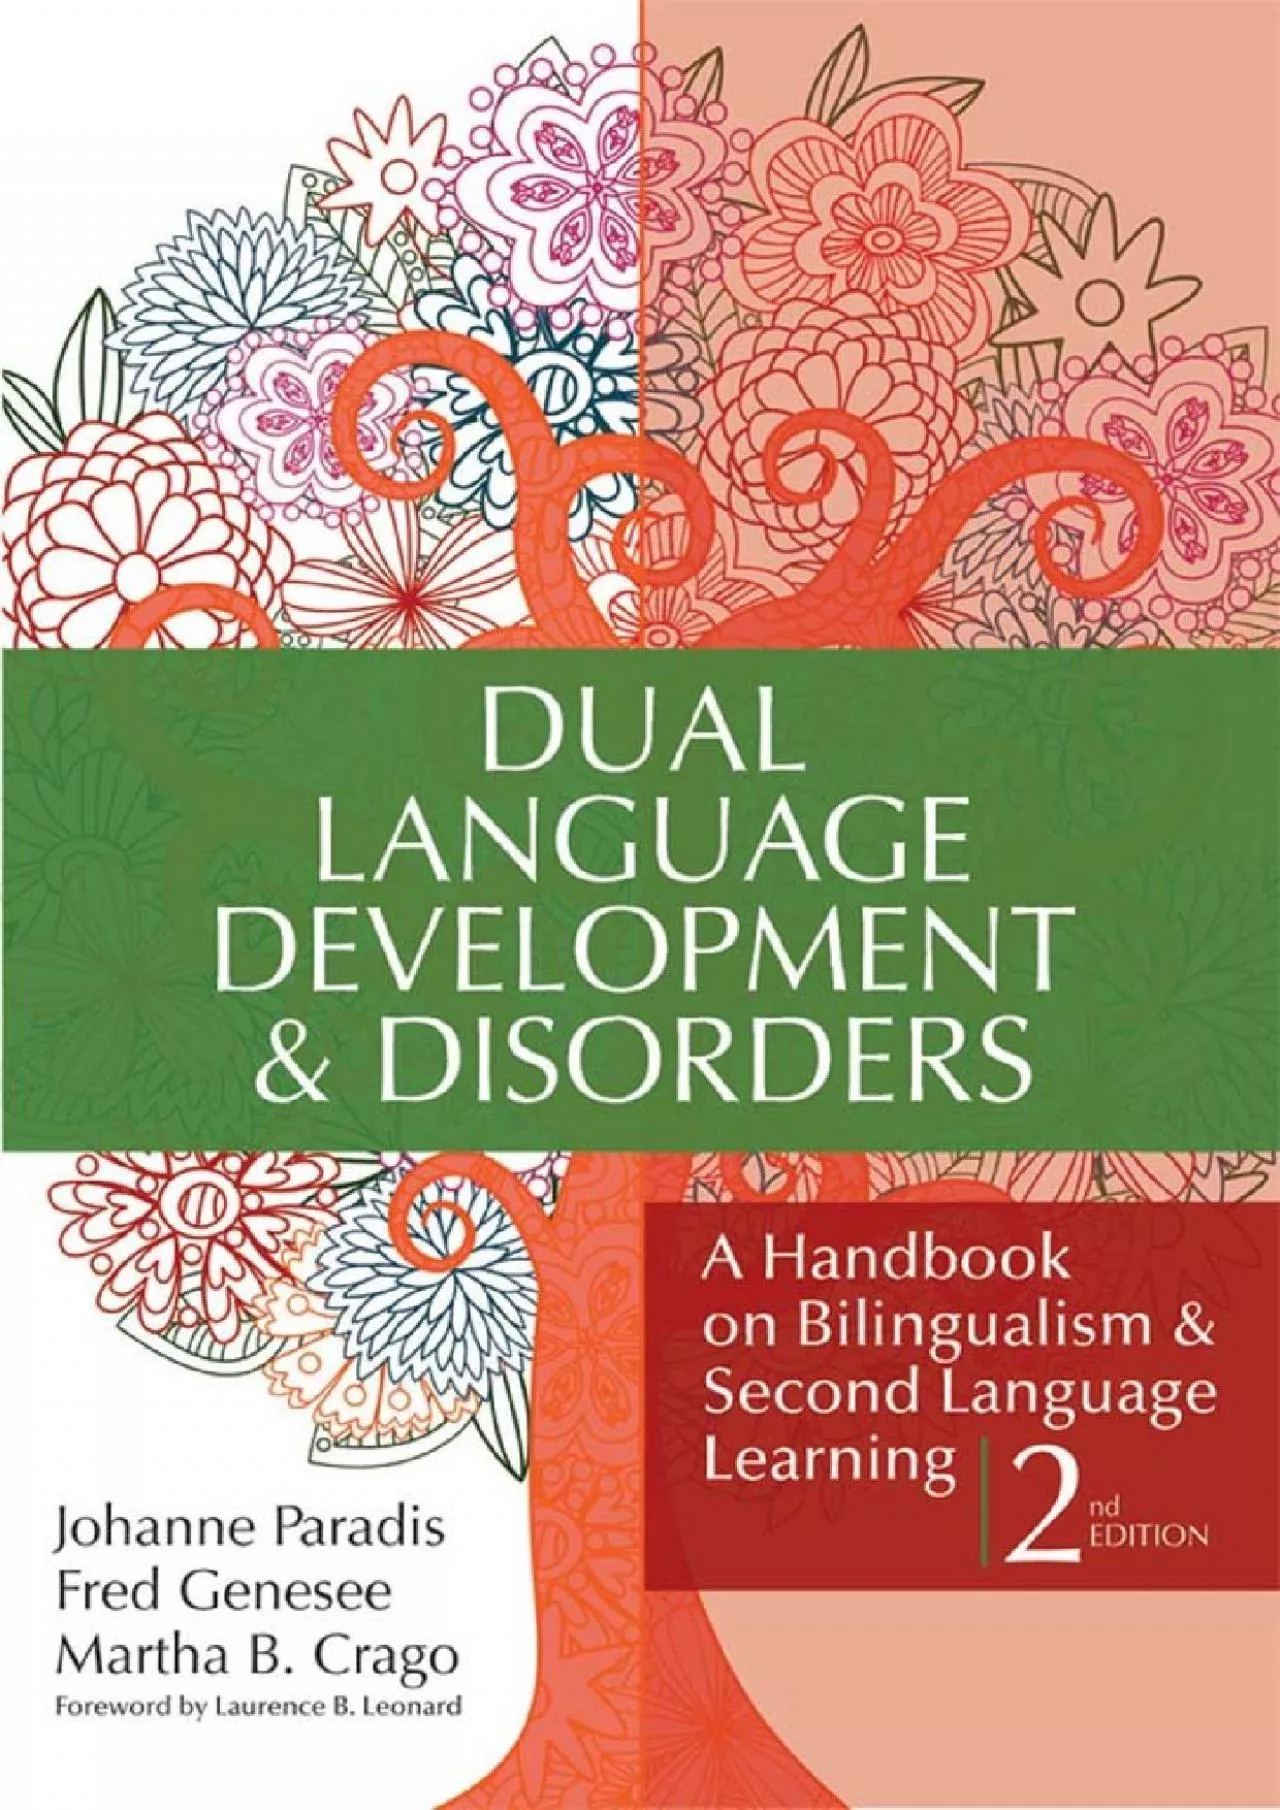 (READ)-Dual Language Development & Disorders: A Handbook on Bilingualism & Second Language